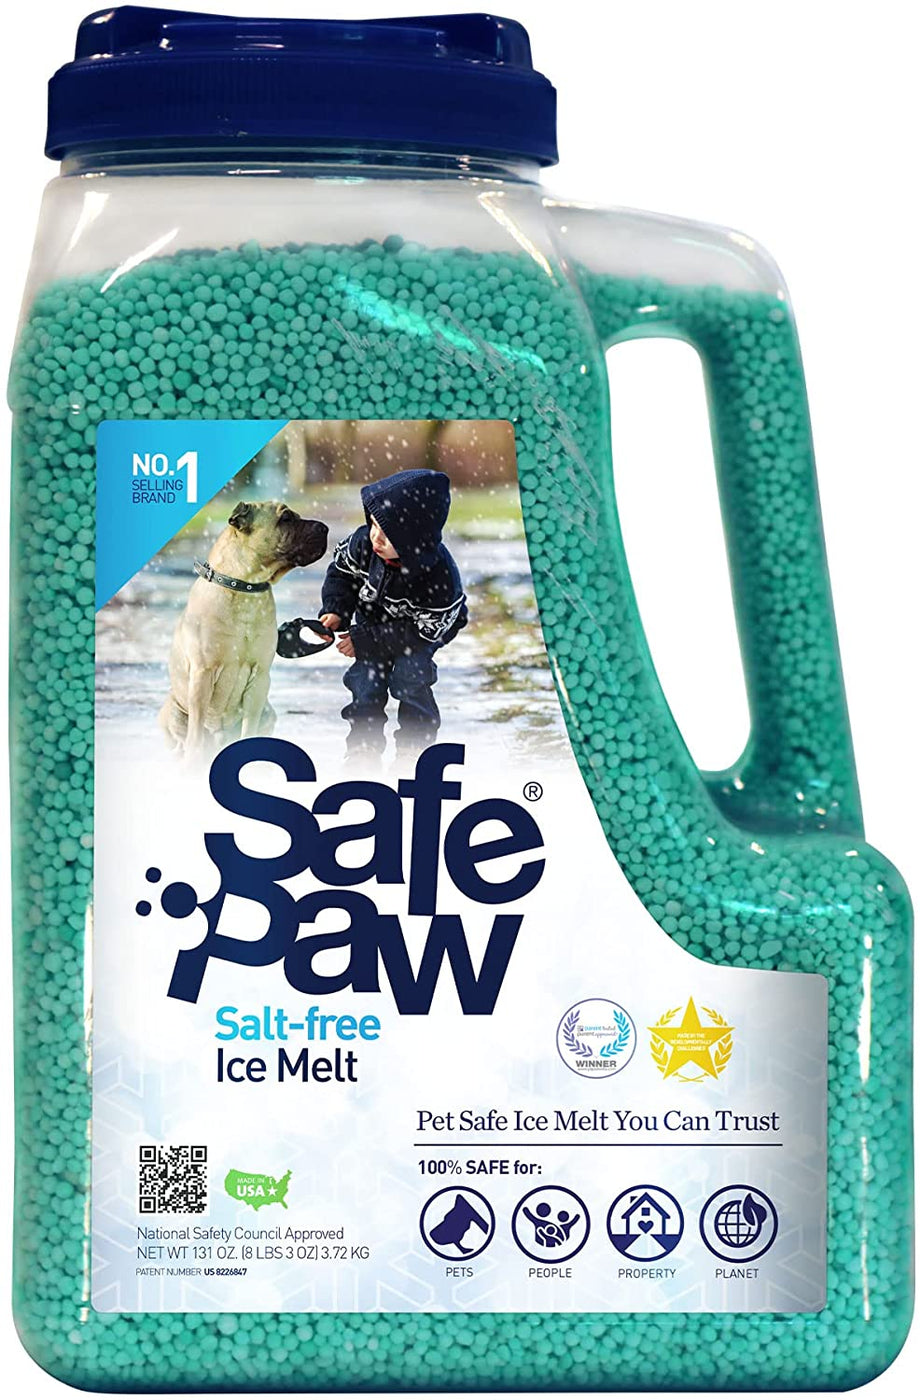 Keep It Green Pet Safe Ice Melt - 12lb Jug - Nontoxic Snow Melter